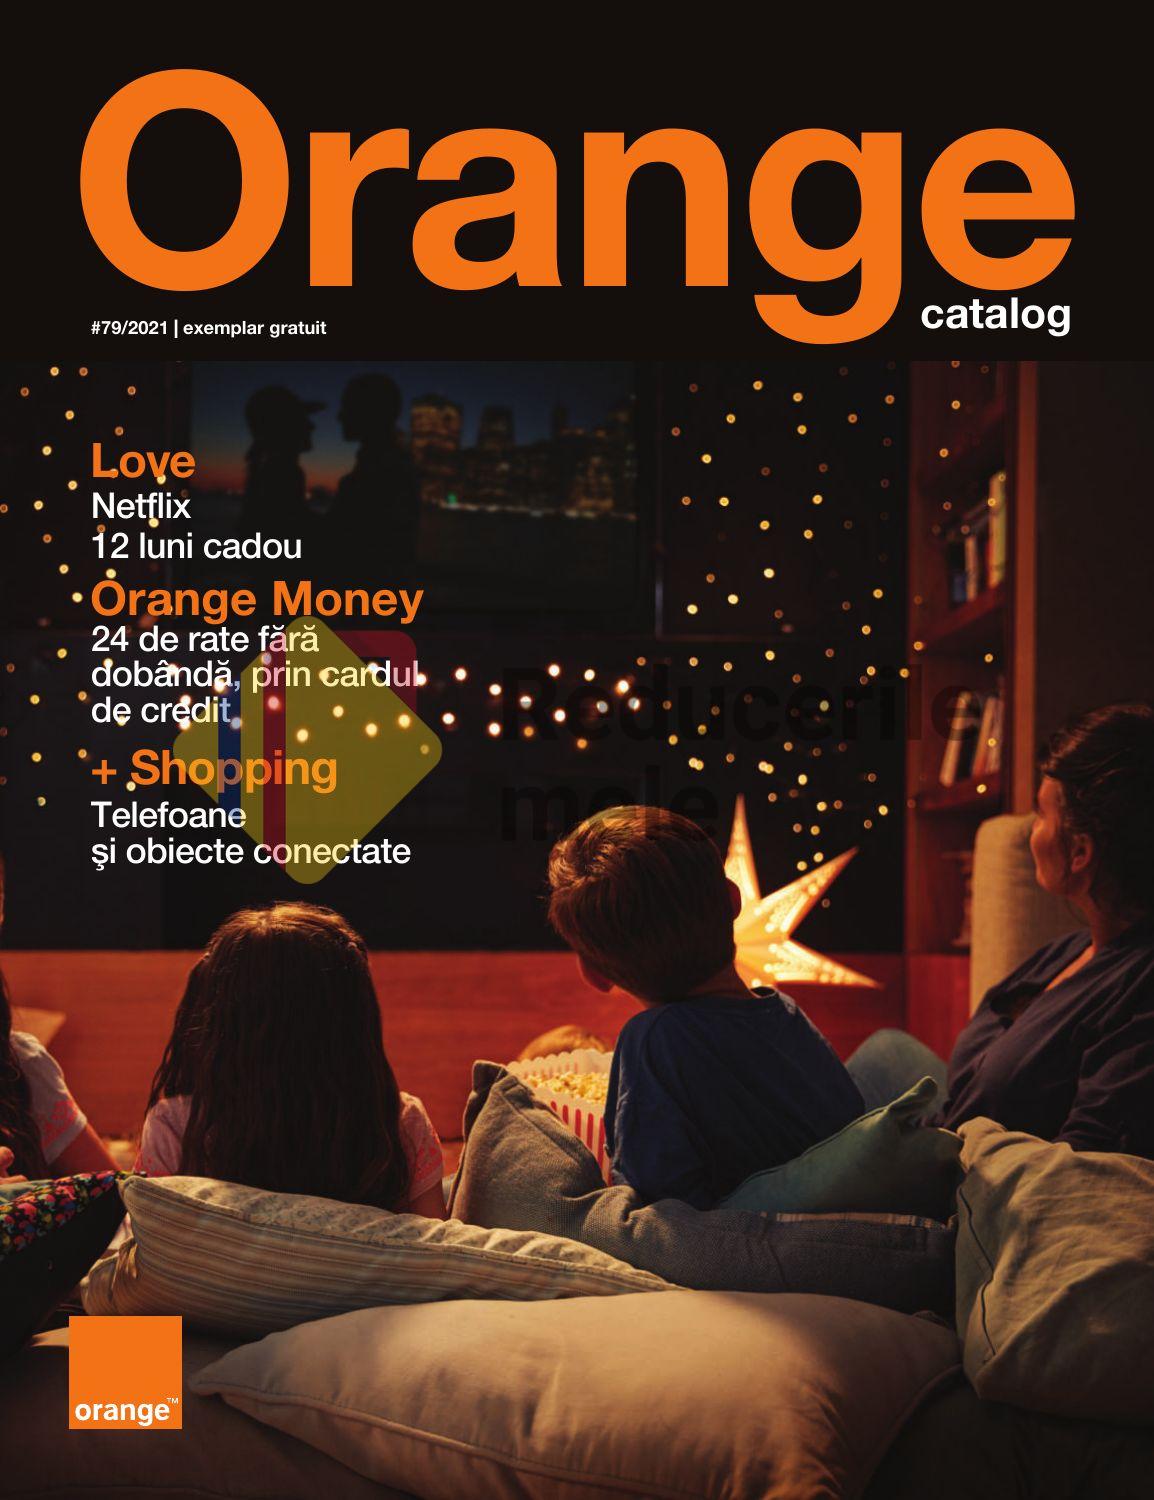 Catalog de oferte Orange - Pagina 1